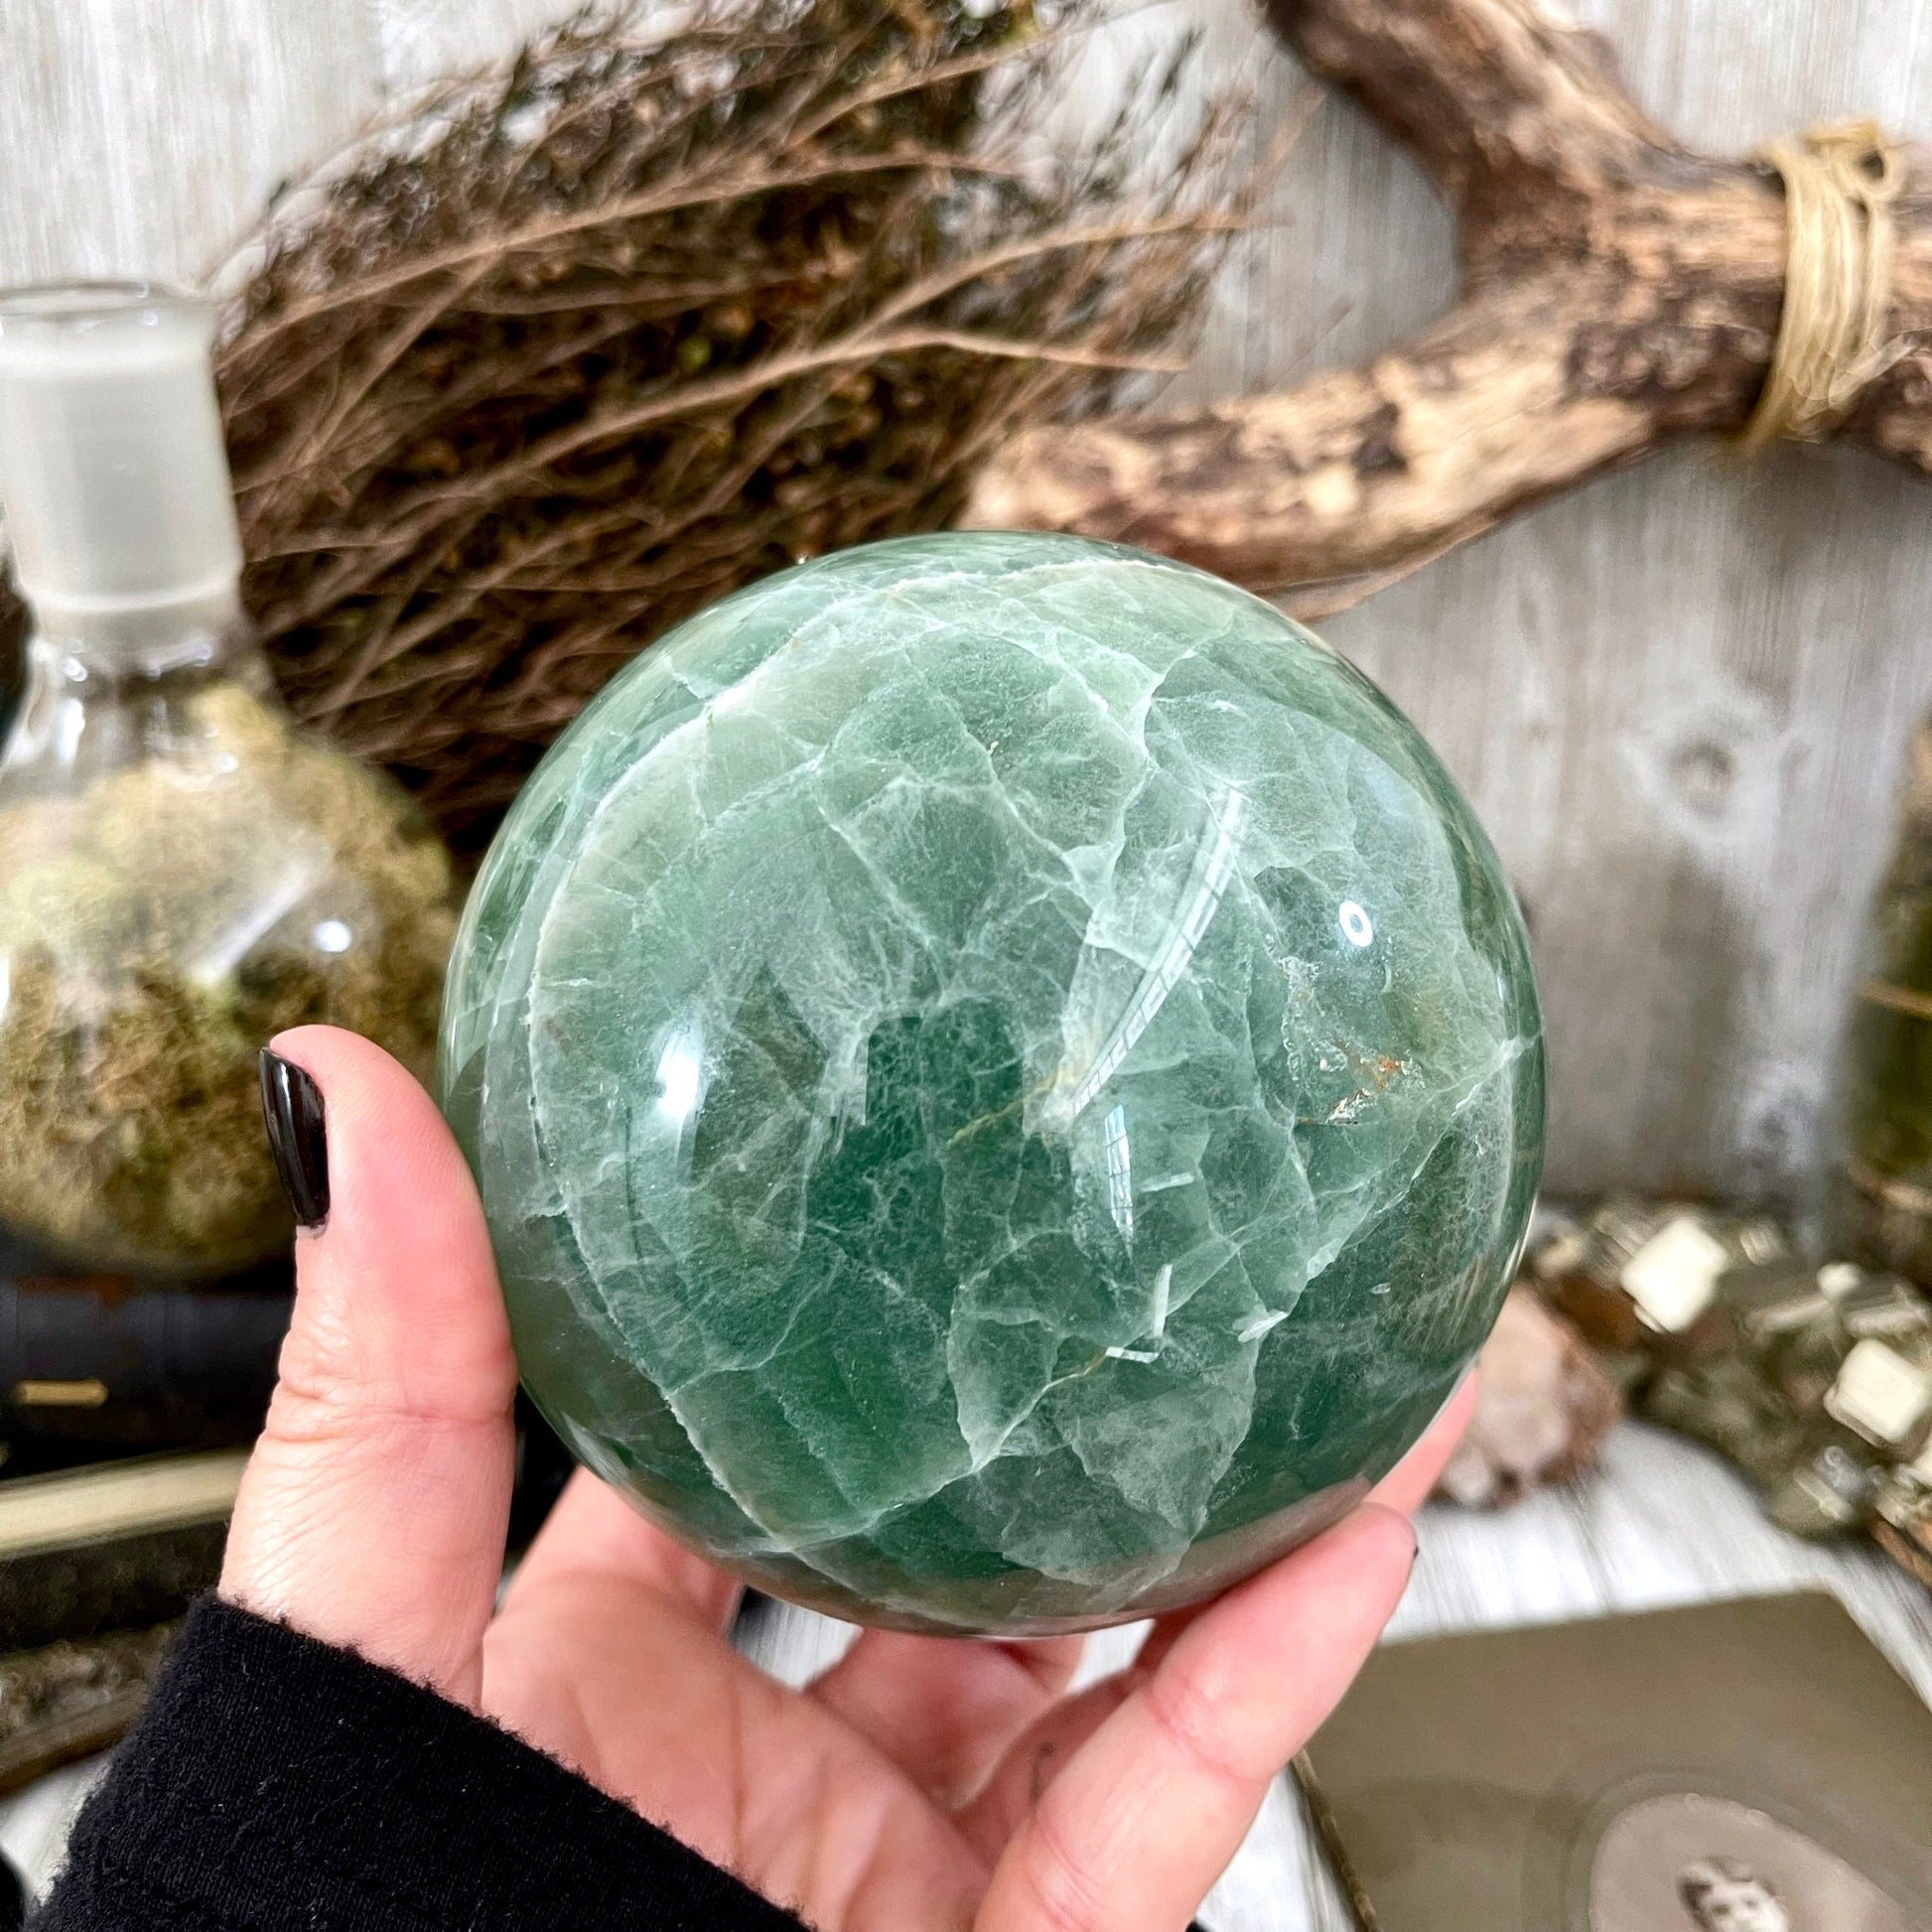 Large Green Fluorite Crystal Ball / FoxlarkCrystals - Foxlark Crystal Jewelry